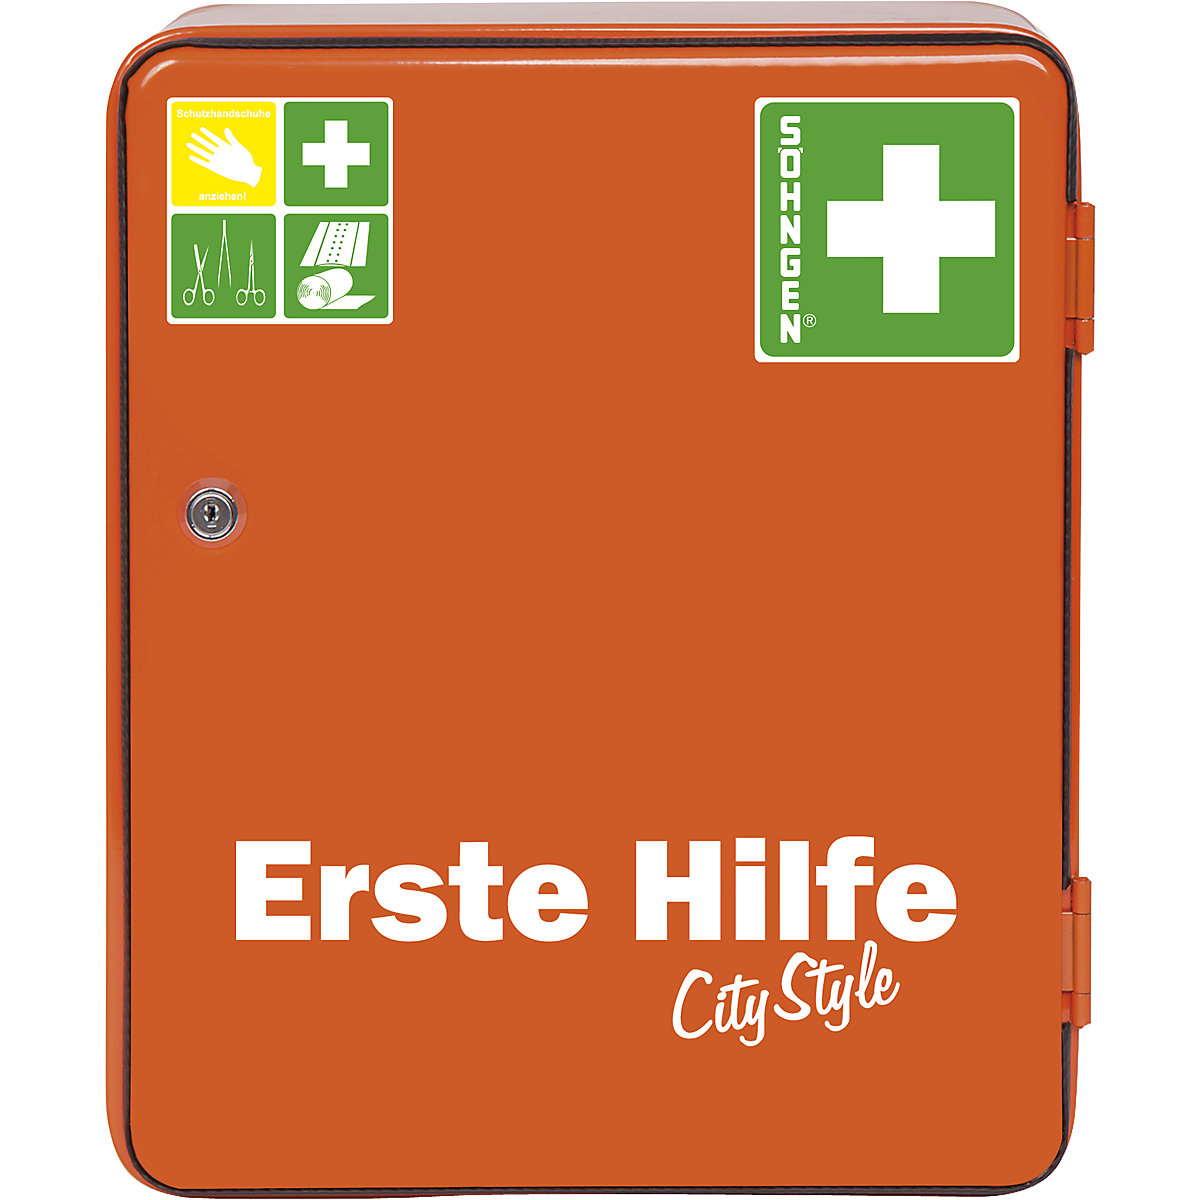 HEIDELBERG City Style first aid cabinet - SÖHNGEN